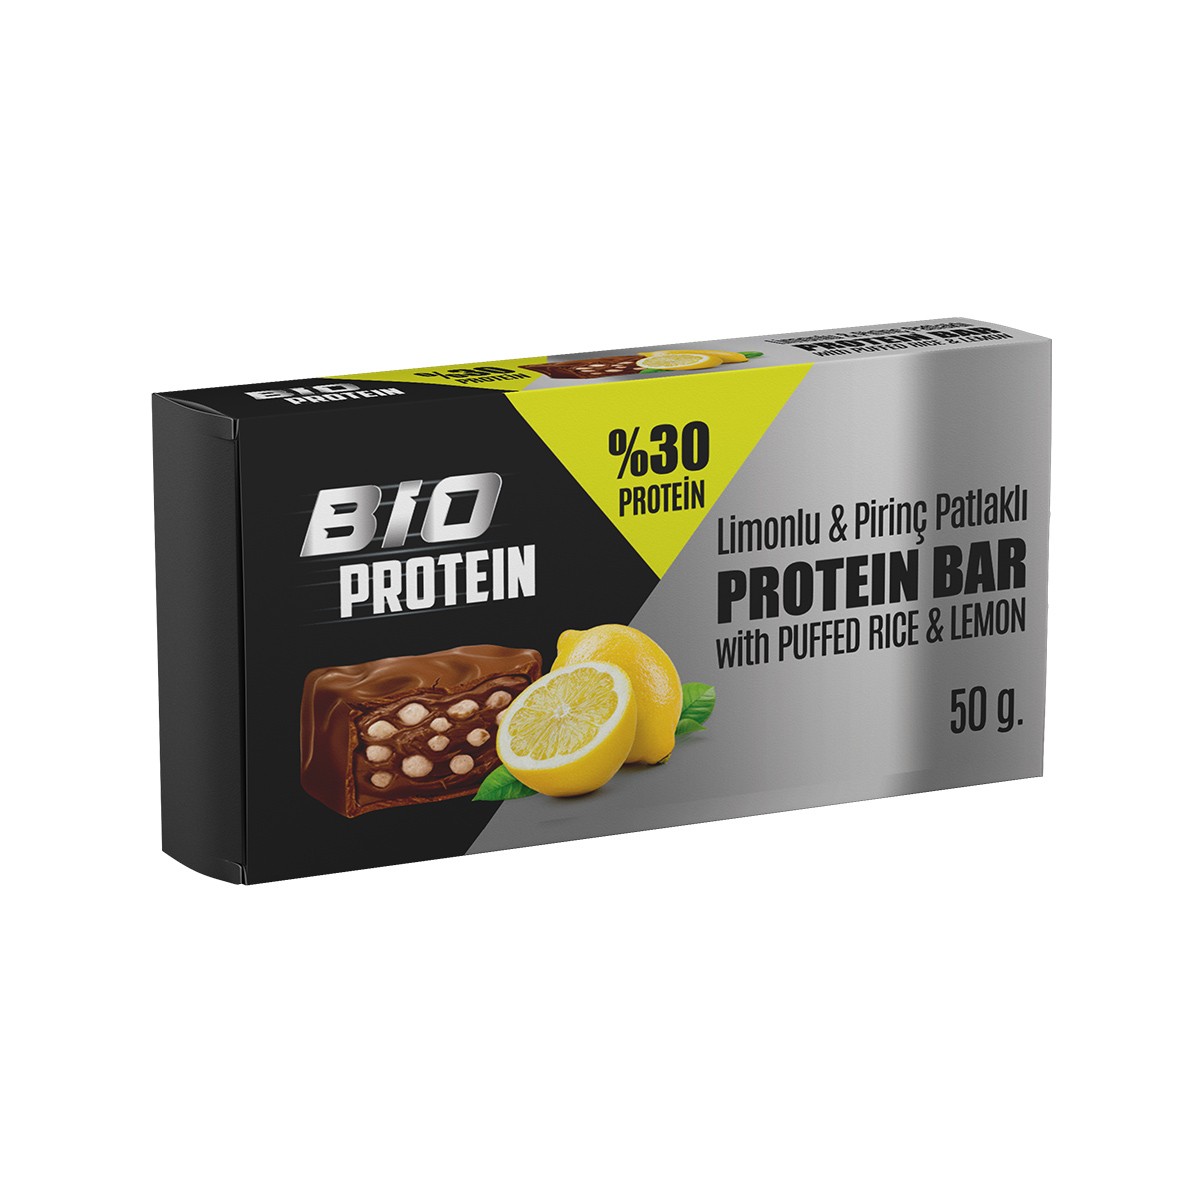 Bio Protein Pirinç Patlaklı Protein Bar - Limon